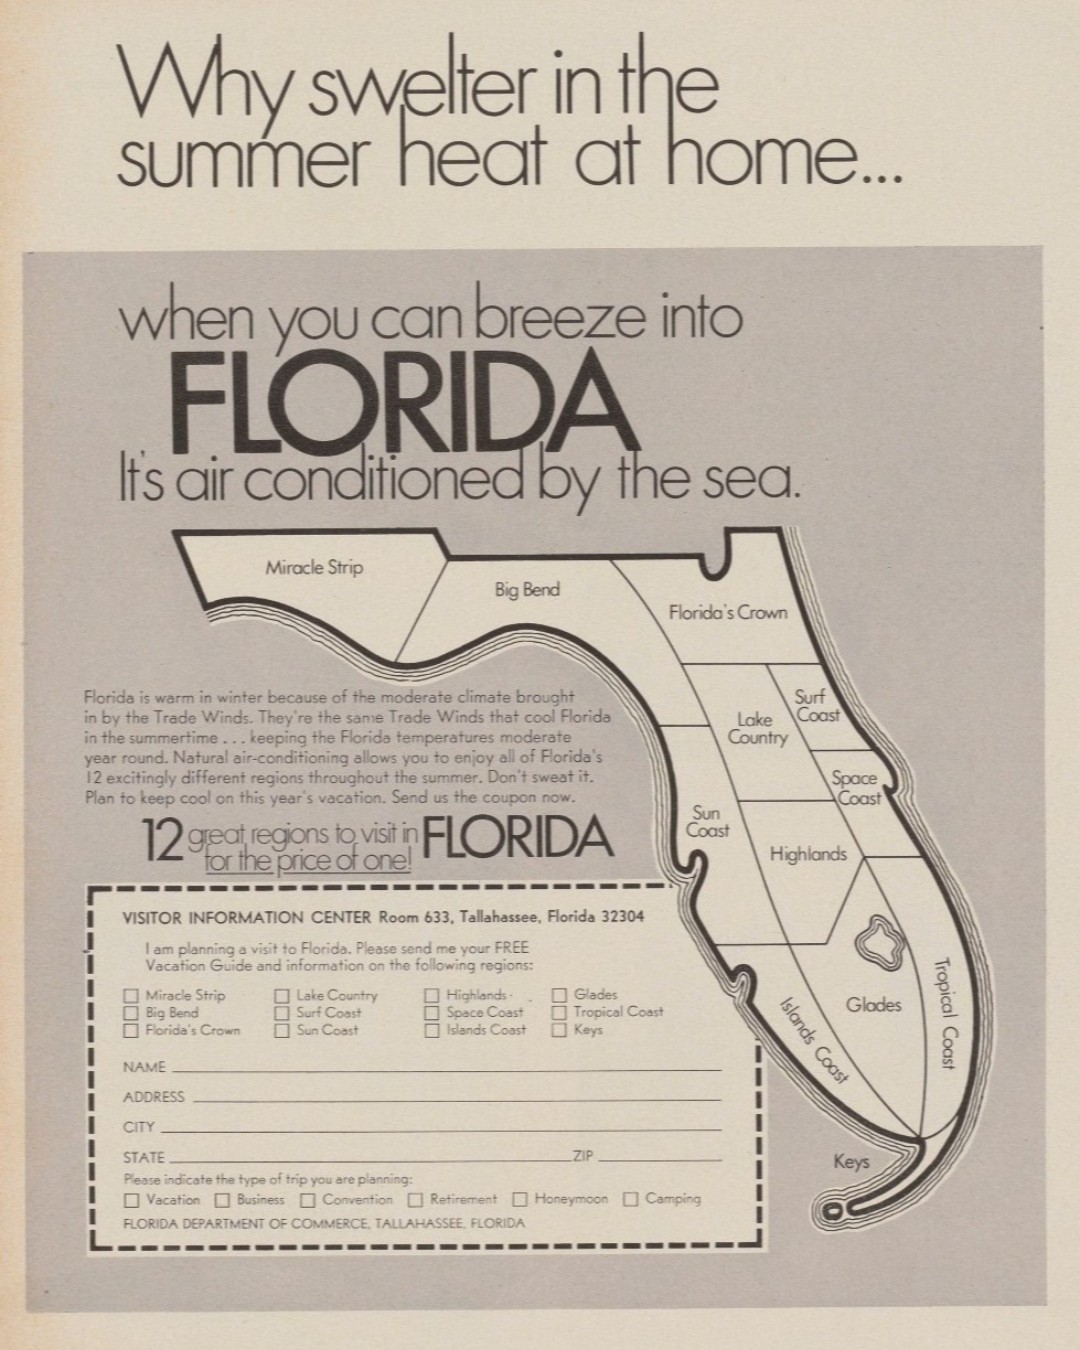 Florida's special summer visitors